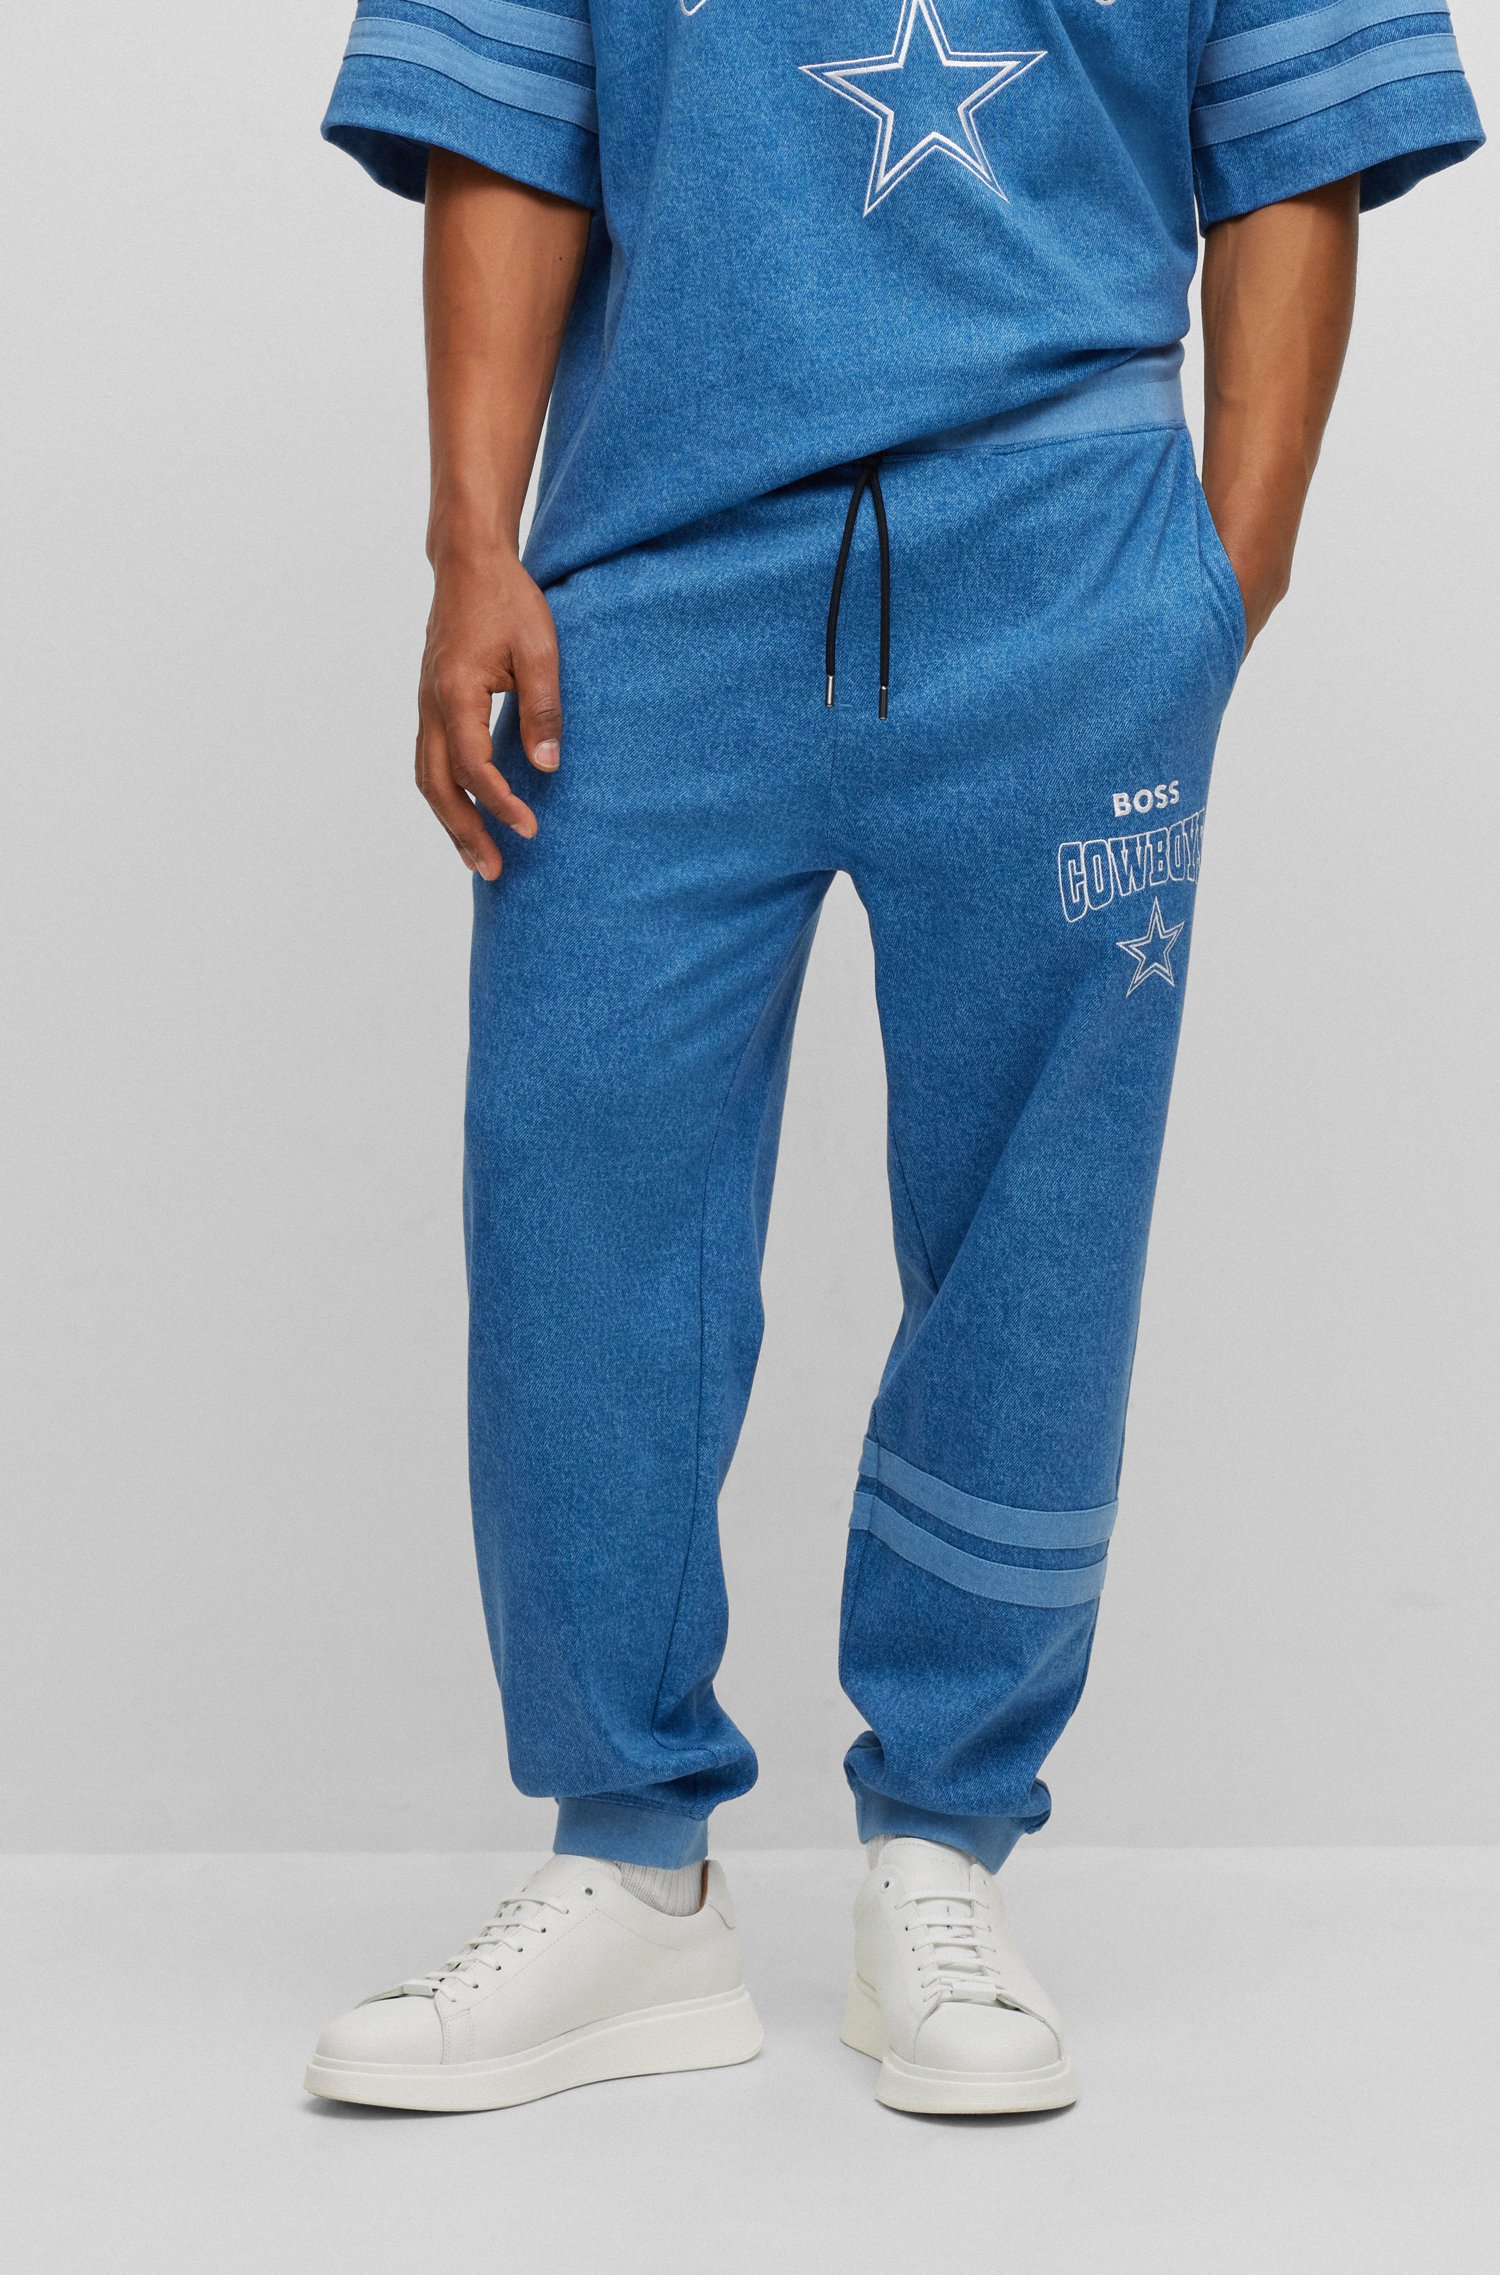 Pantalones de chándal oversize fit BOSS x NFL algodón con apariencia denim